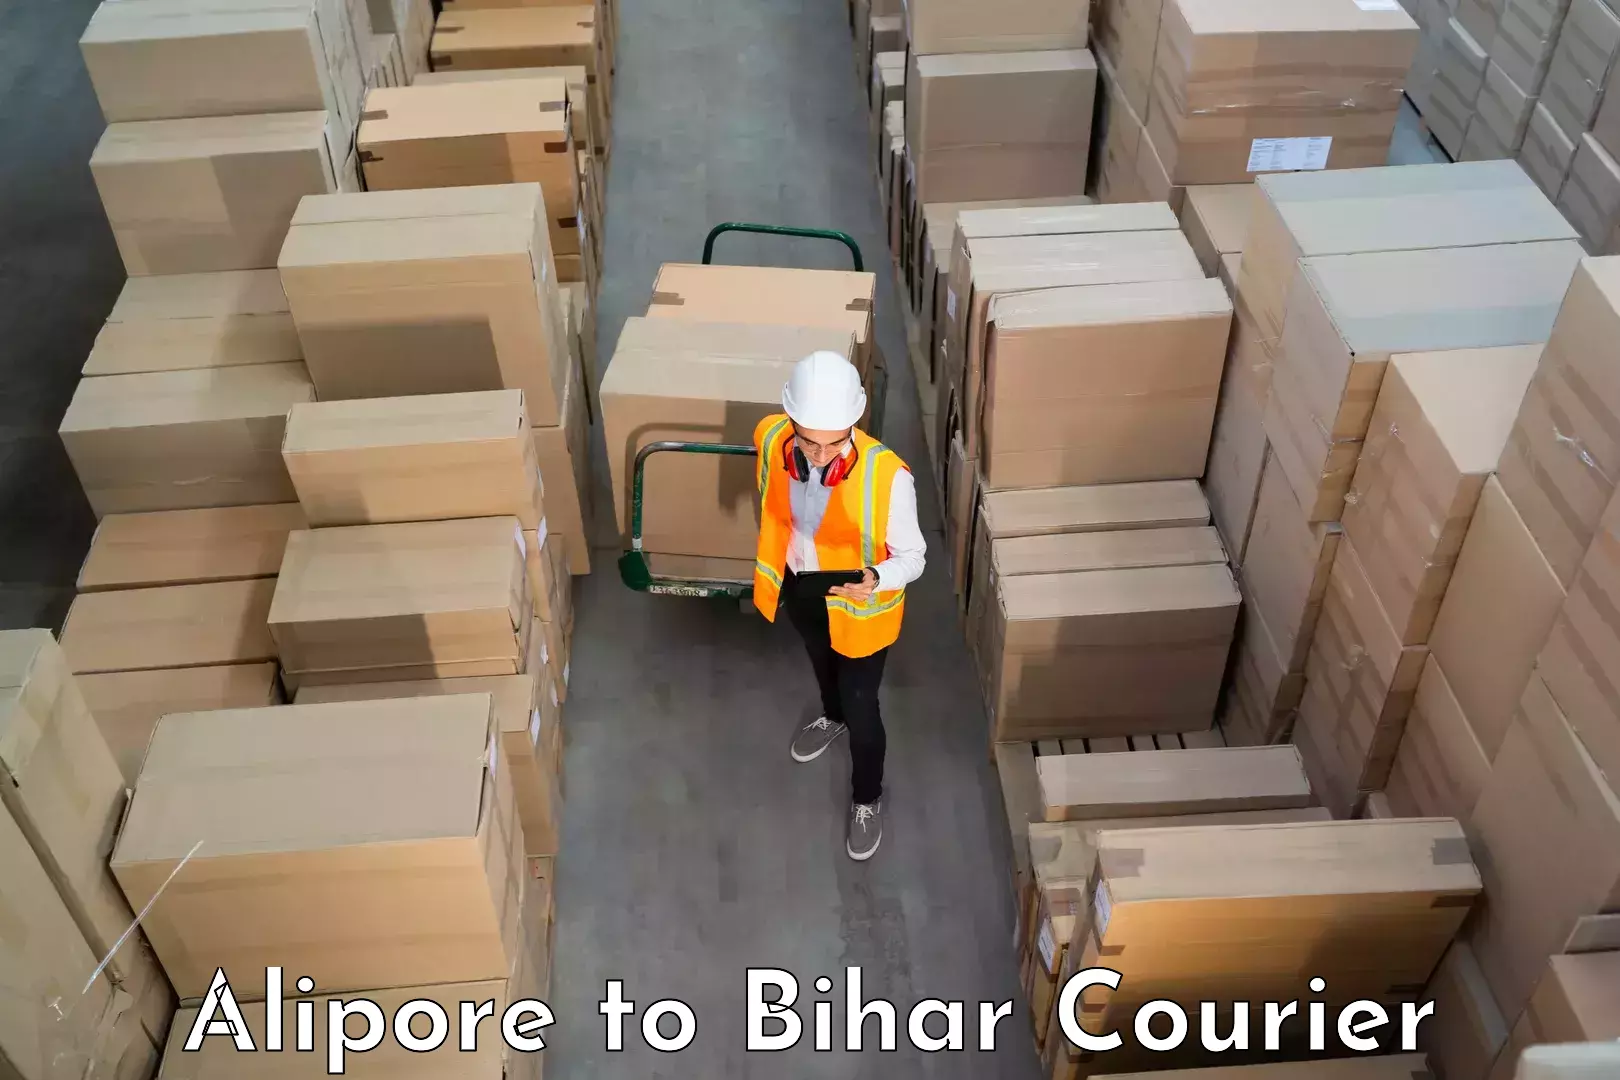 Professional moving company Alipore to Sheohar